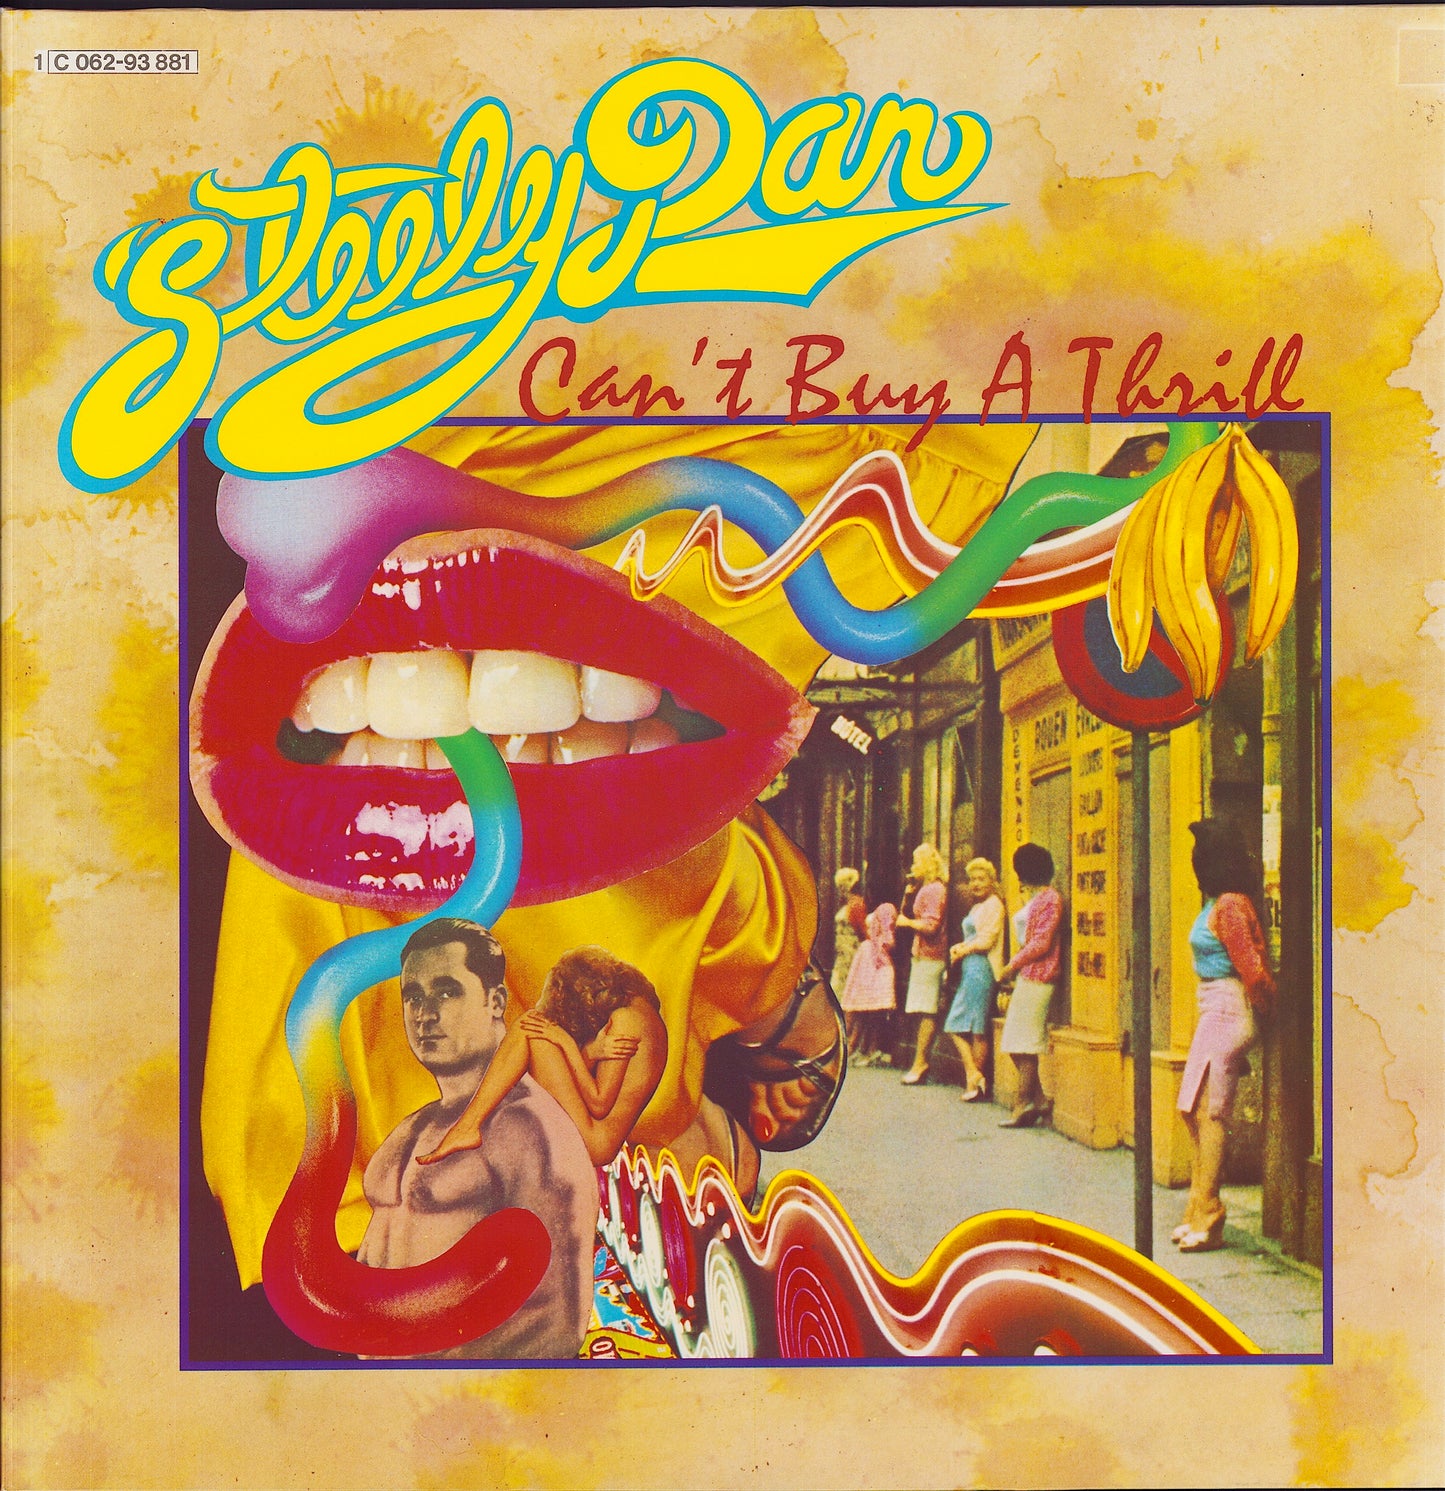 Steely Dan ‎- Can't Buy A Thrill (Vinyl LP)